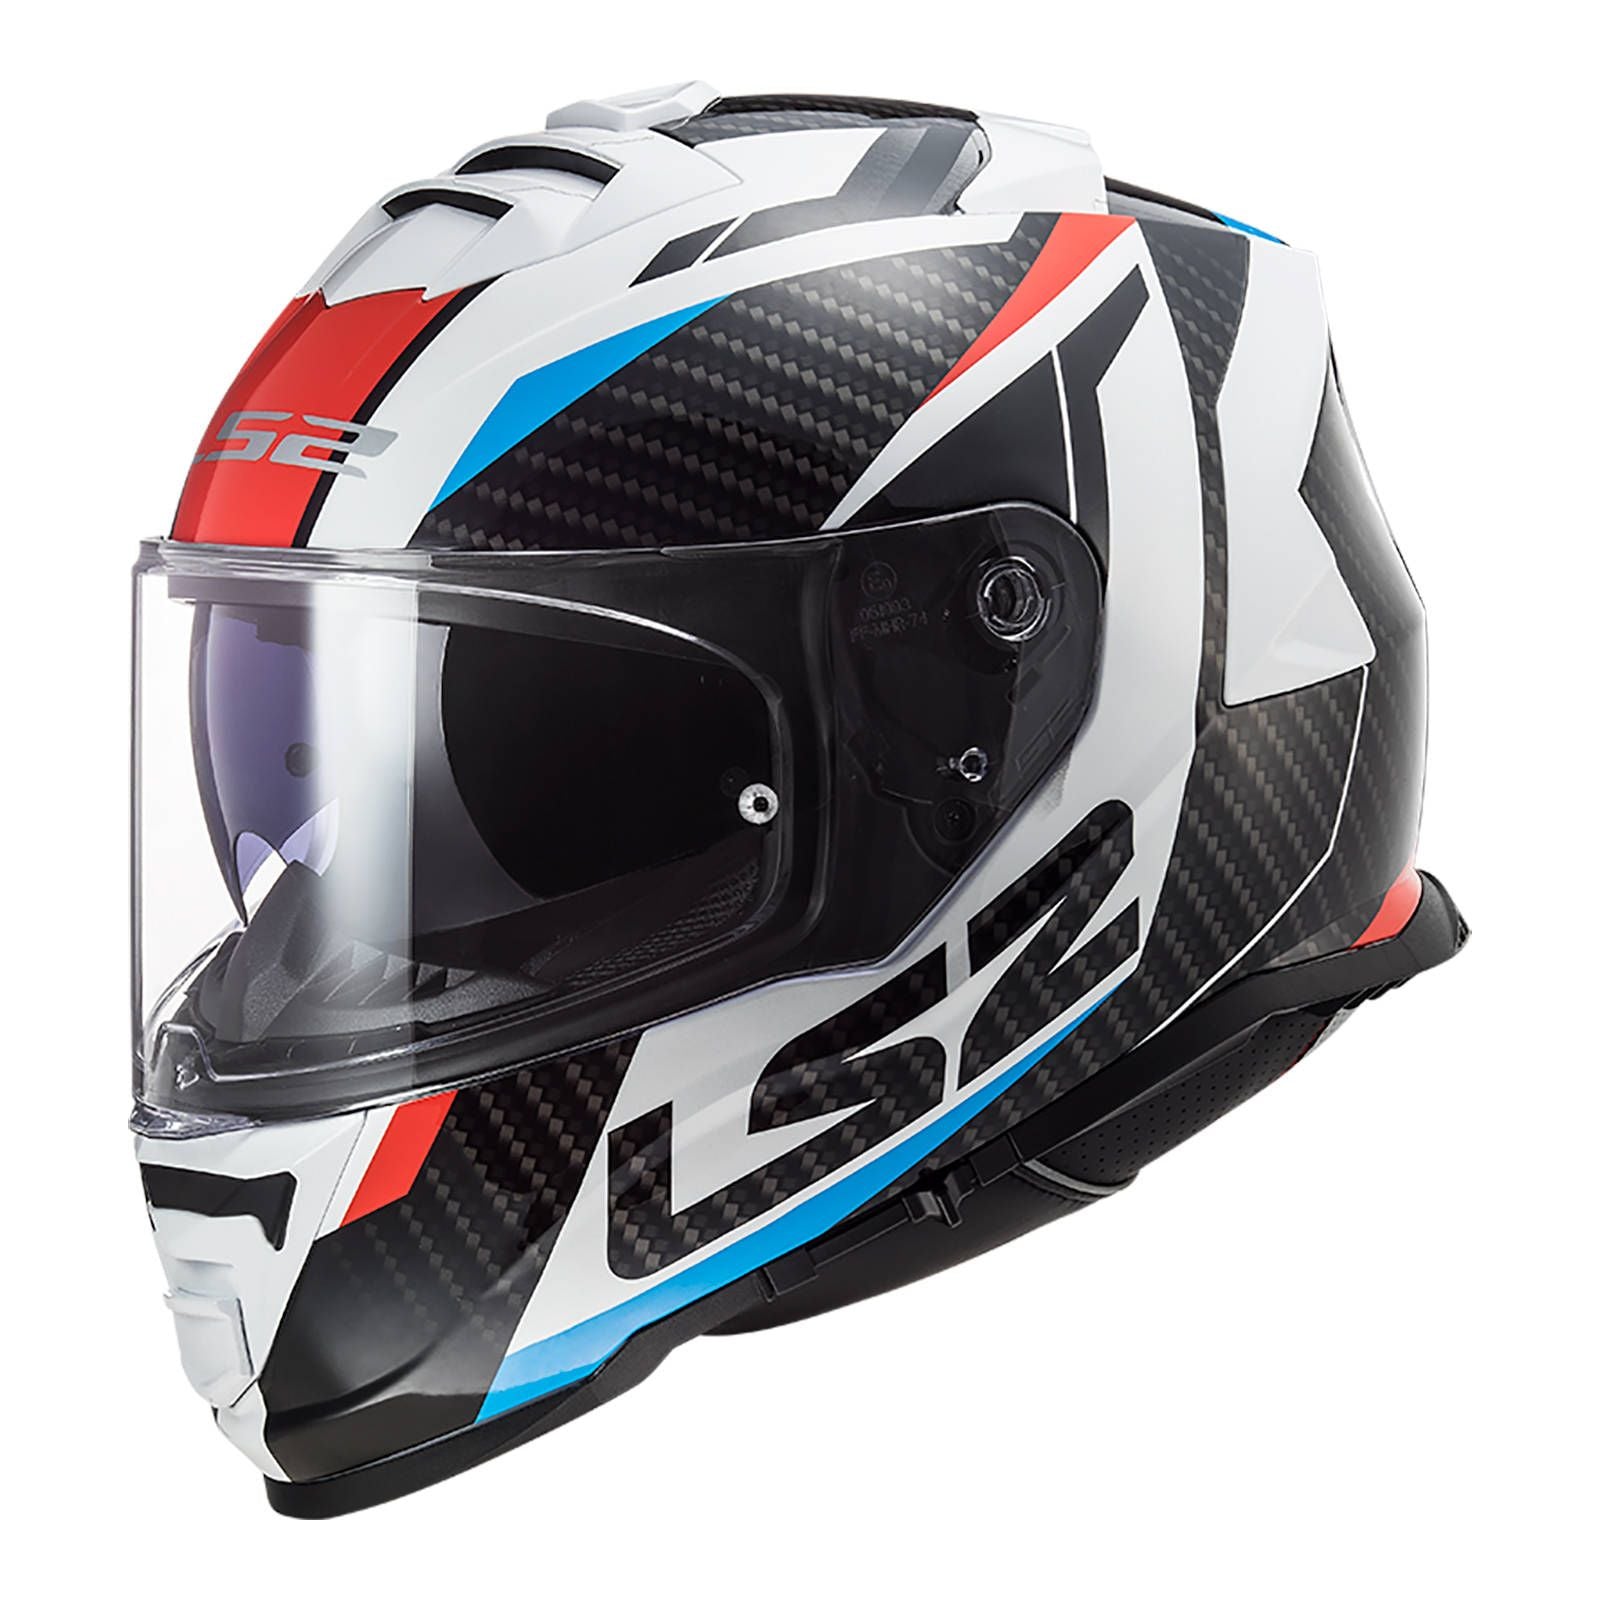 New LS2 FF800 Storm Racer Helmet - White / Blue / Red (XS) #LS2FF800RACWBRXS